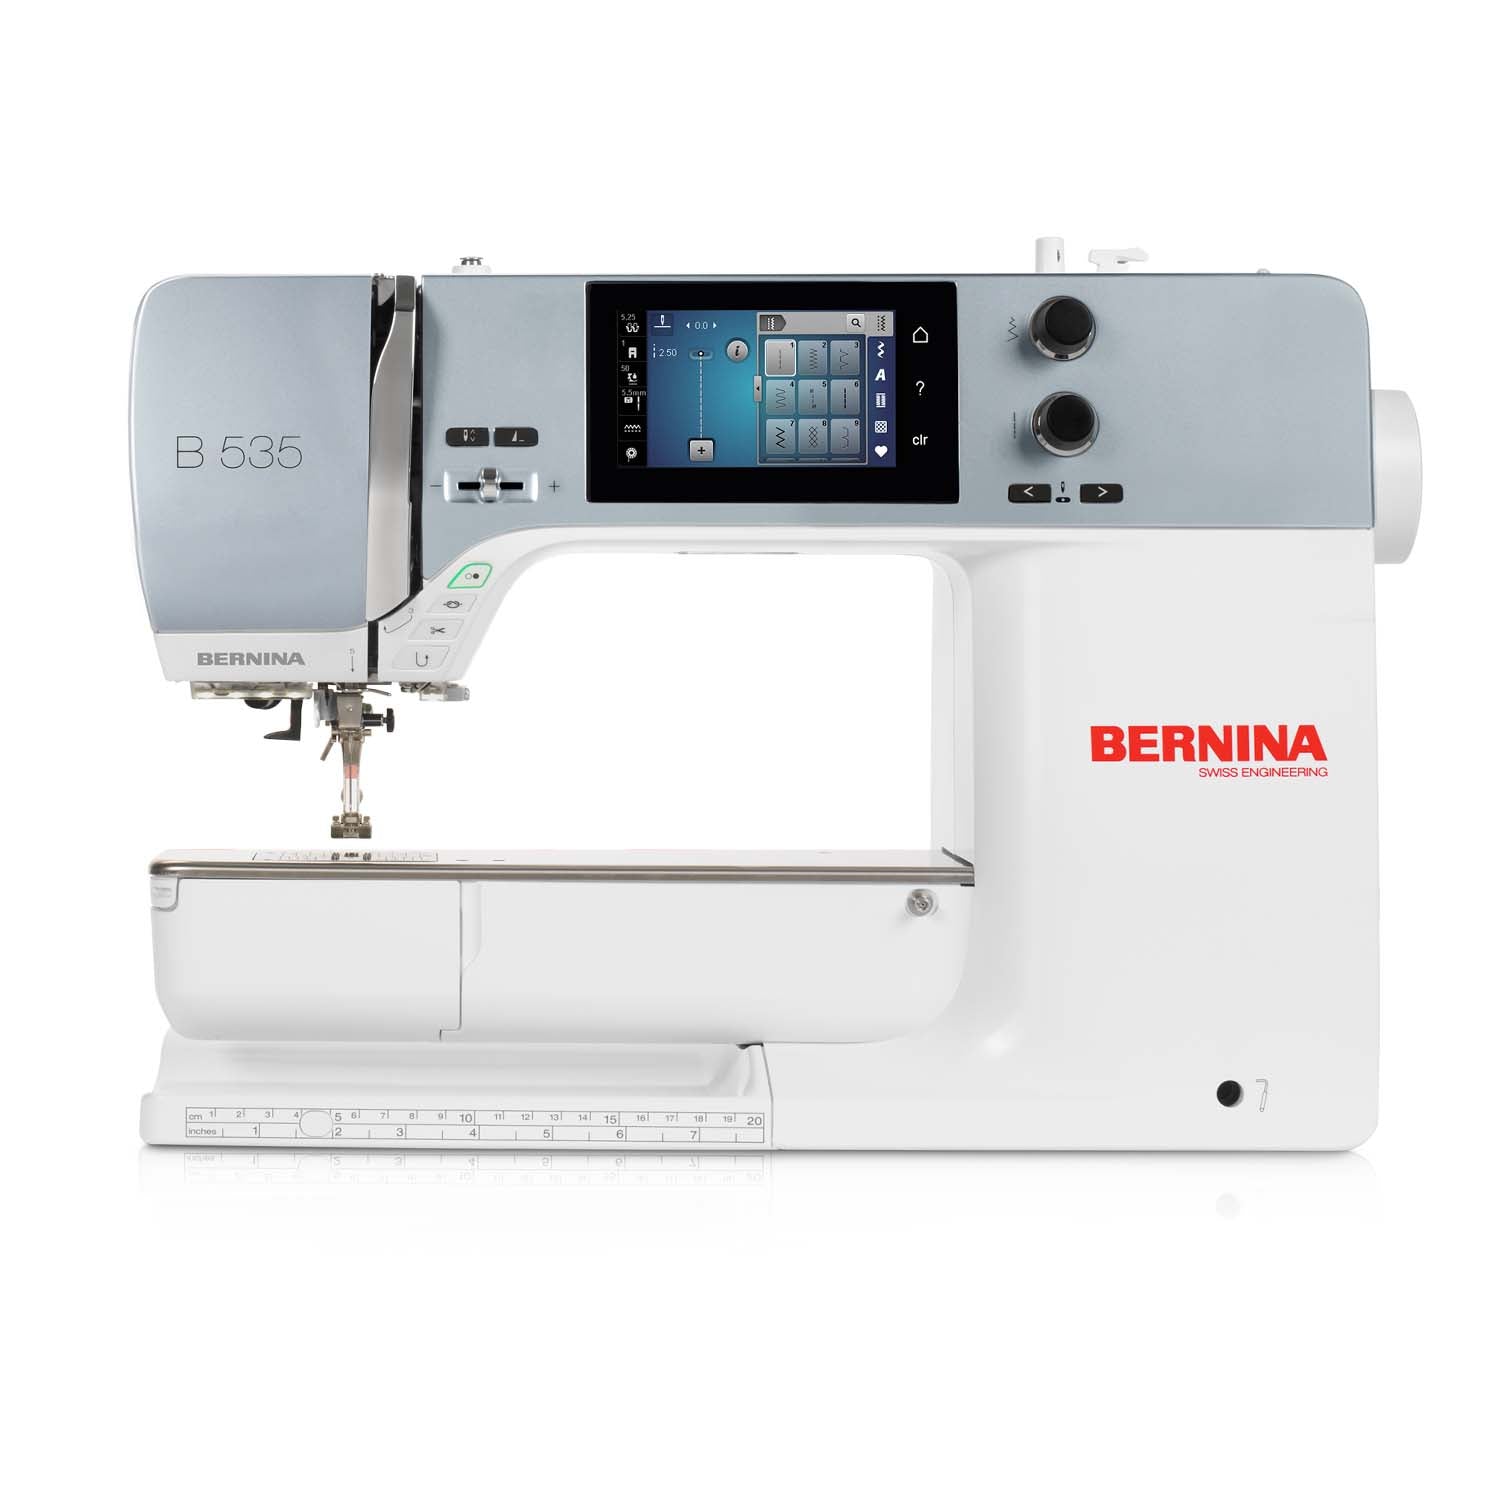 BERNINA 535 Sewing Machine